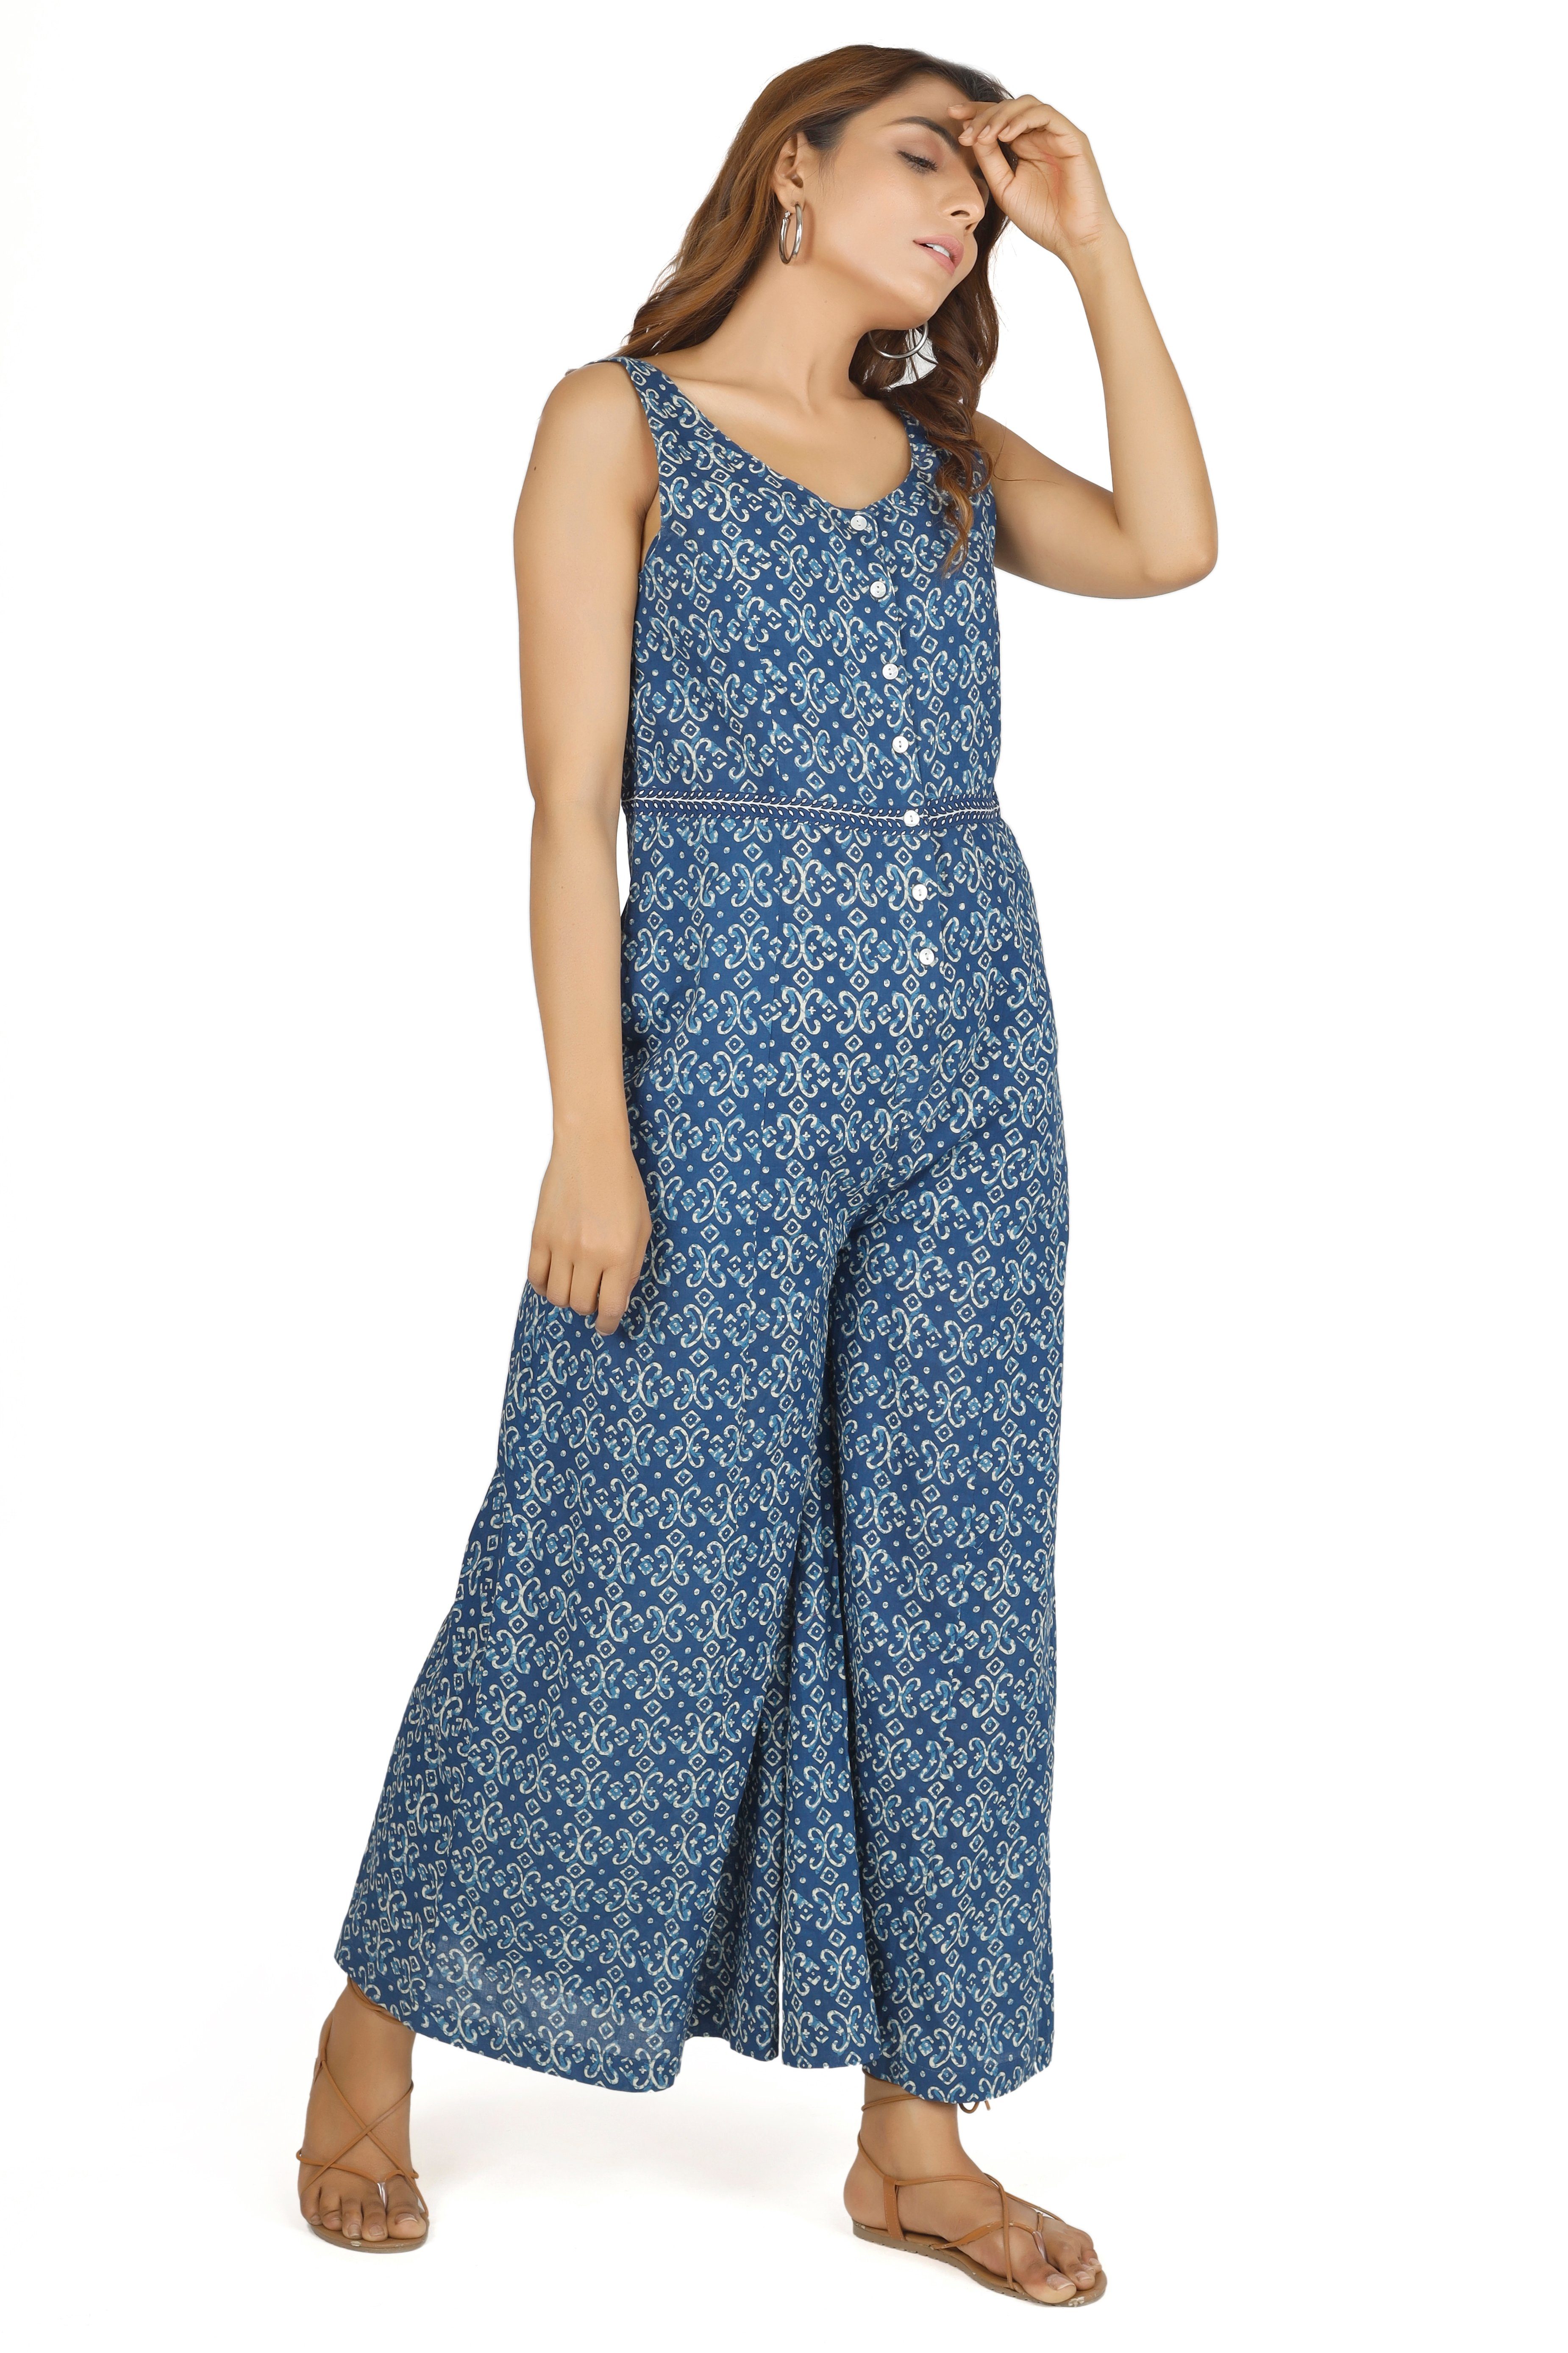 Boho Guru-Shop Style Relaxhose Bekleidung Sommerliche alternative Oversize.. Latzhose, blau Ethno